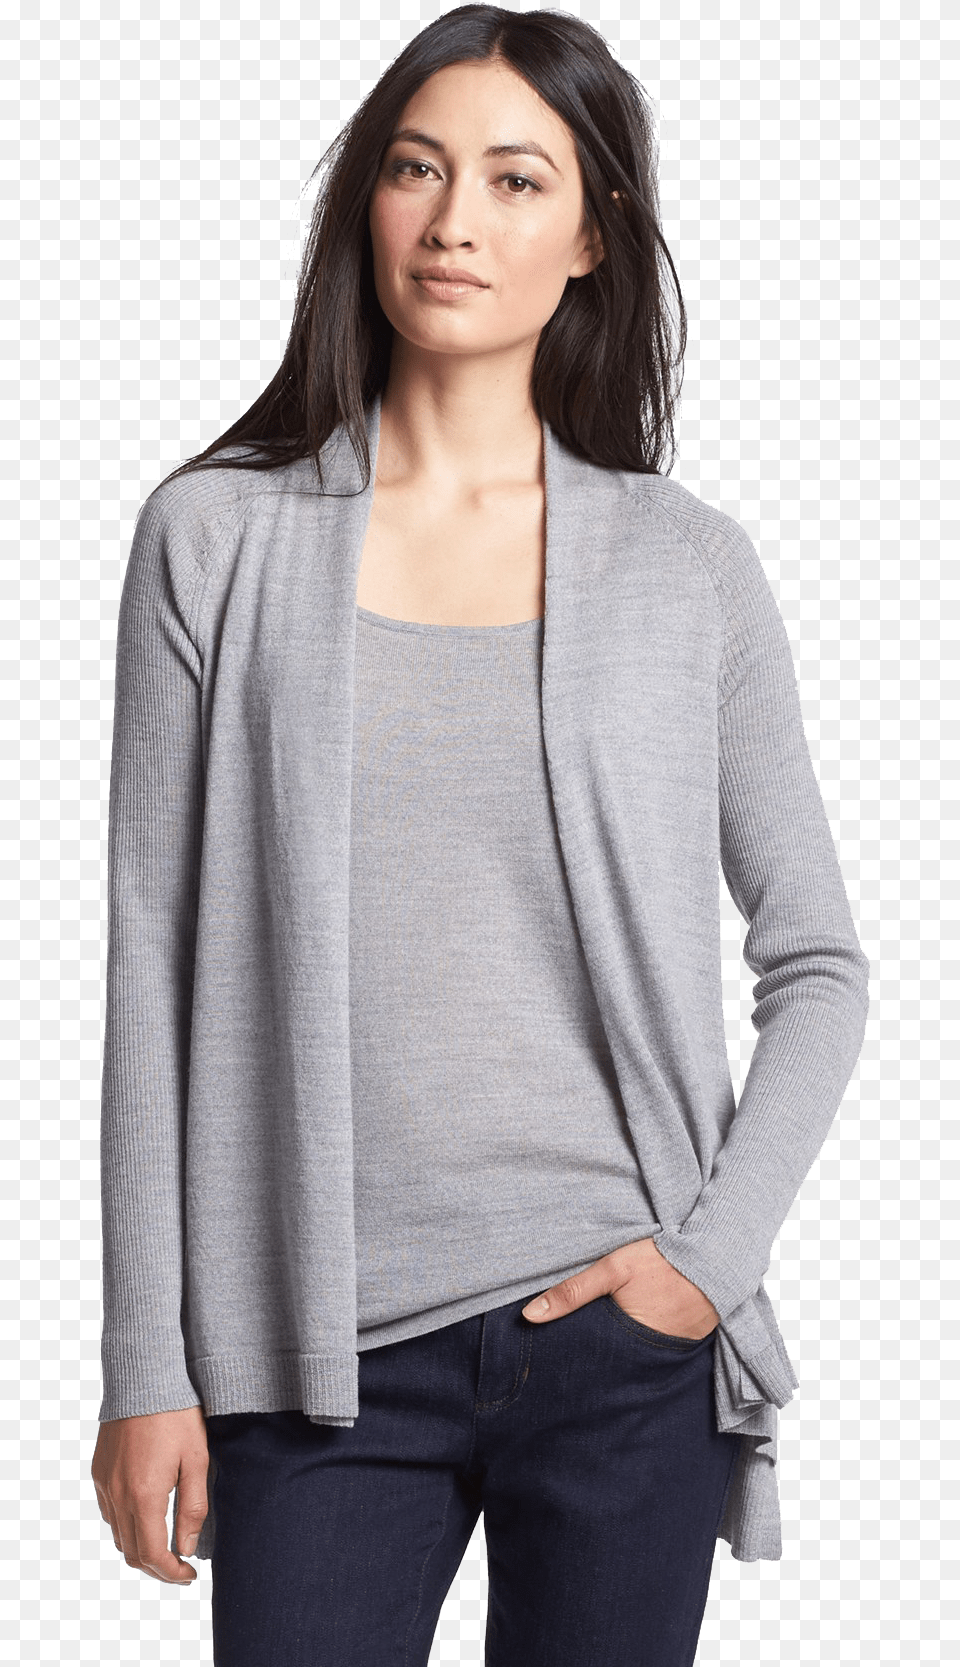 Women Shrug Hd Background, Clothing, Knitwear, Sweater, Coat Png